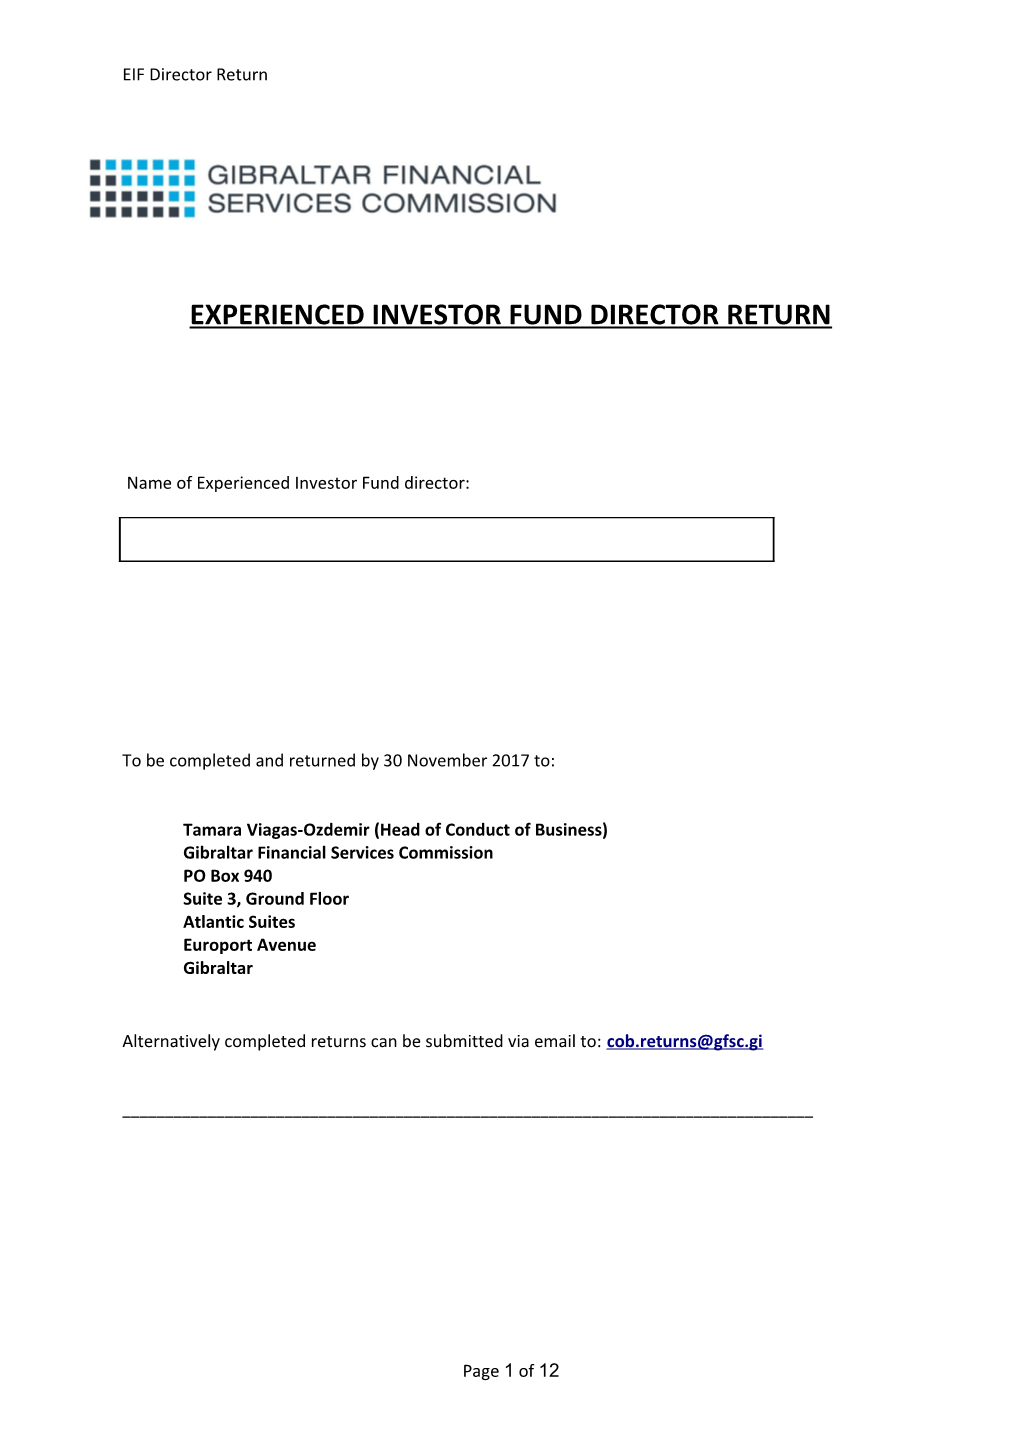 Experienced Investor Fund Director Return